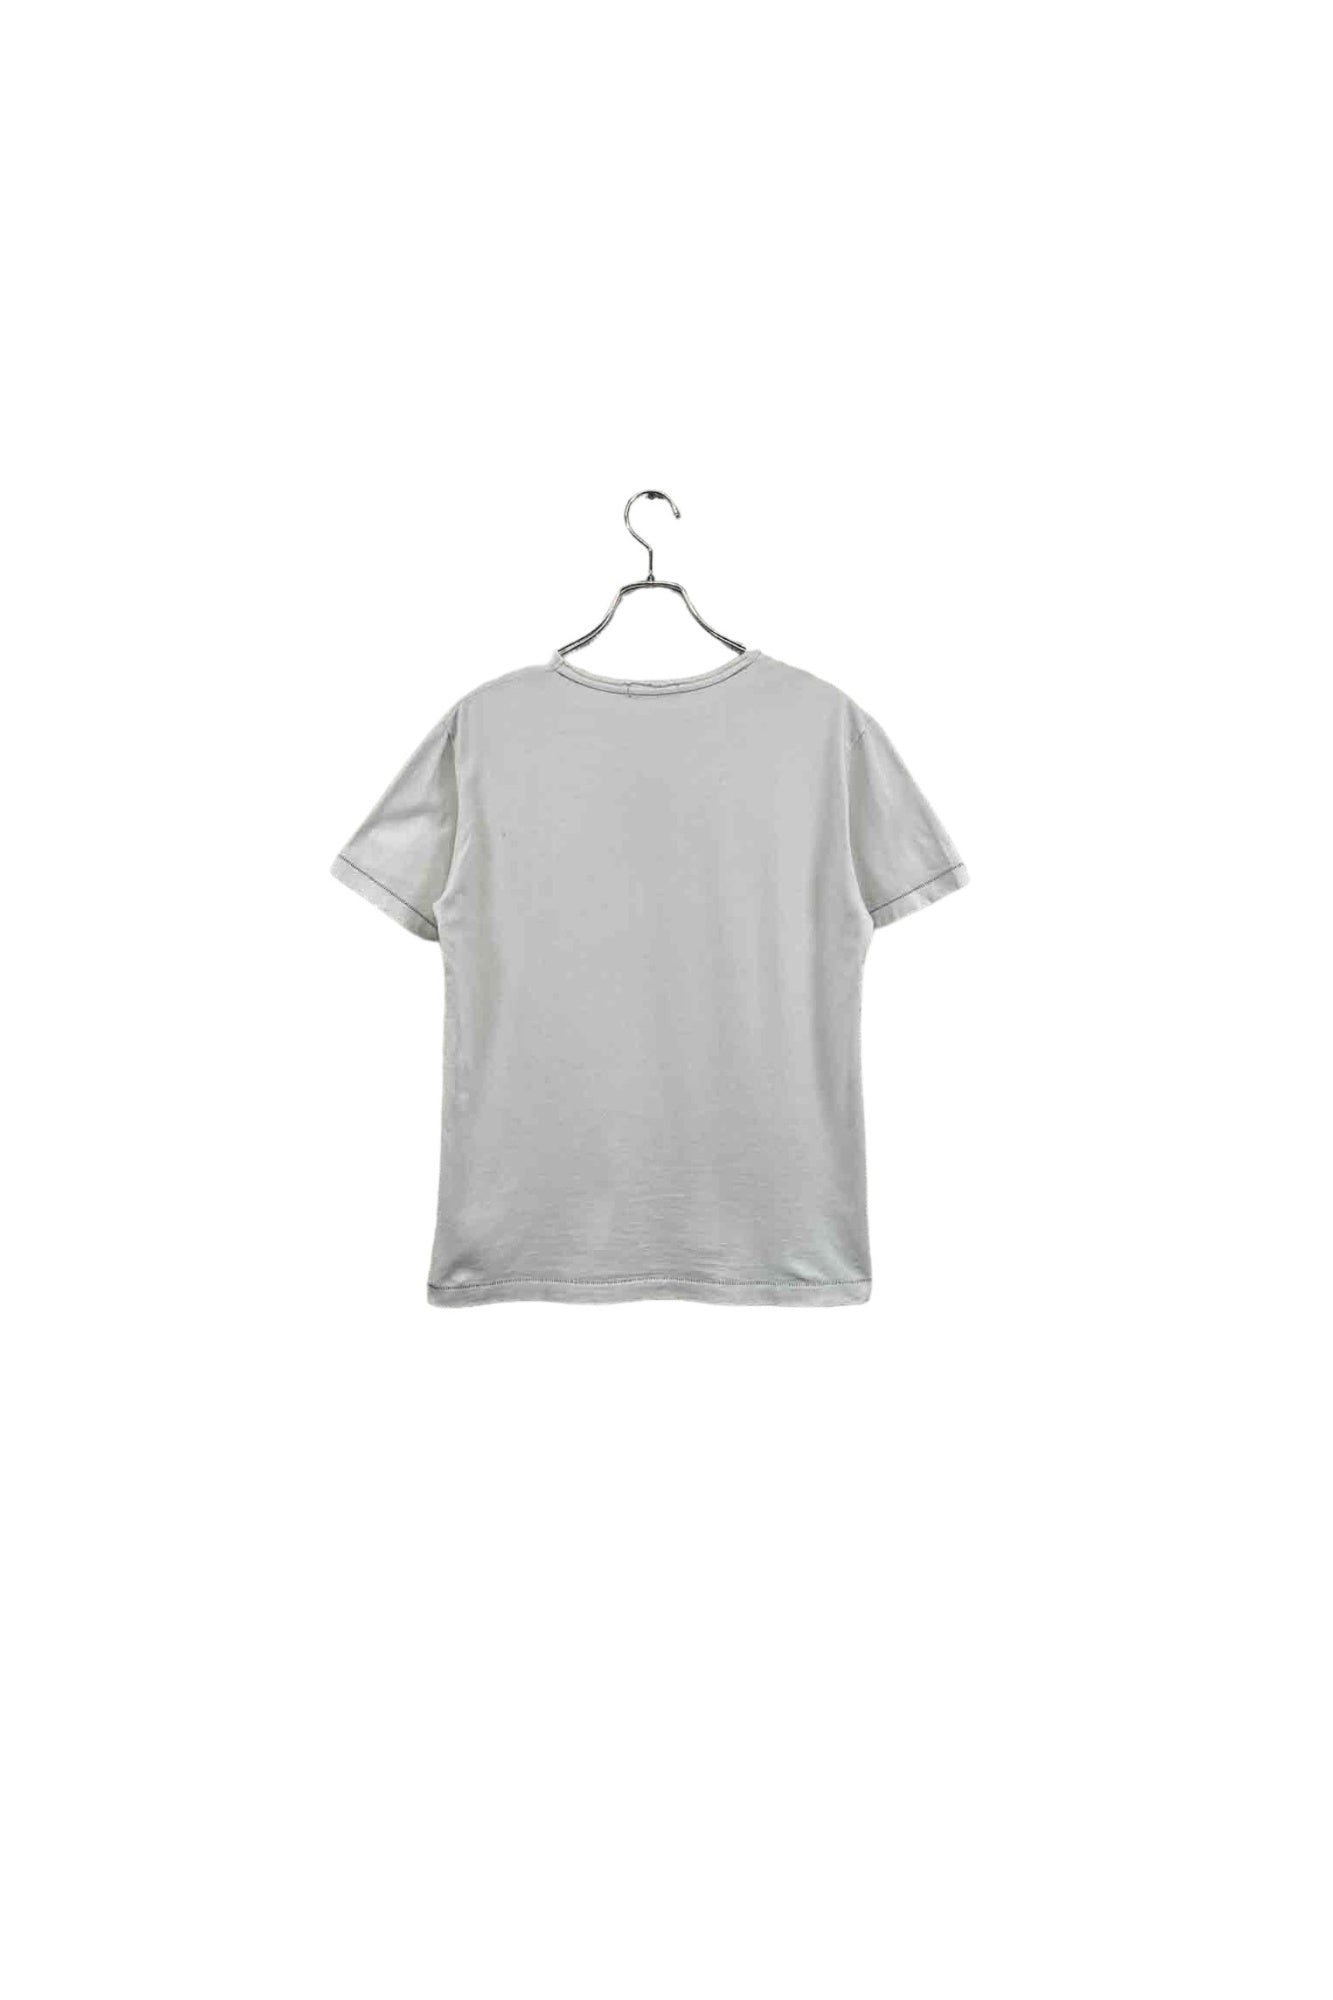 BURBERRY BLACK LABEL white T-shirt